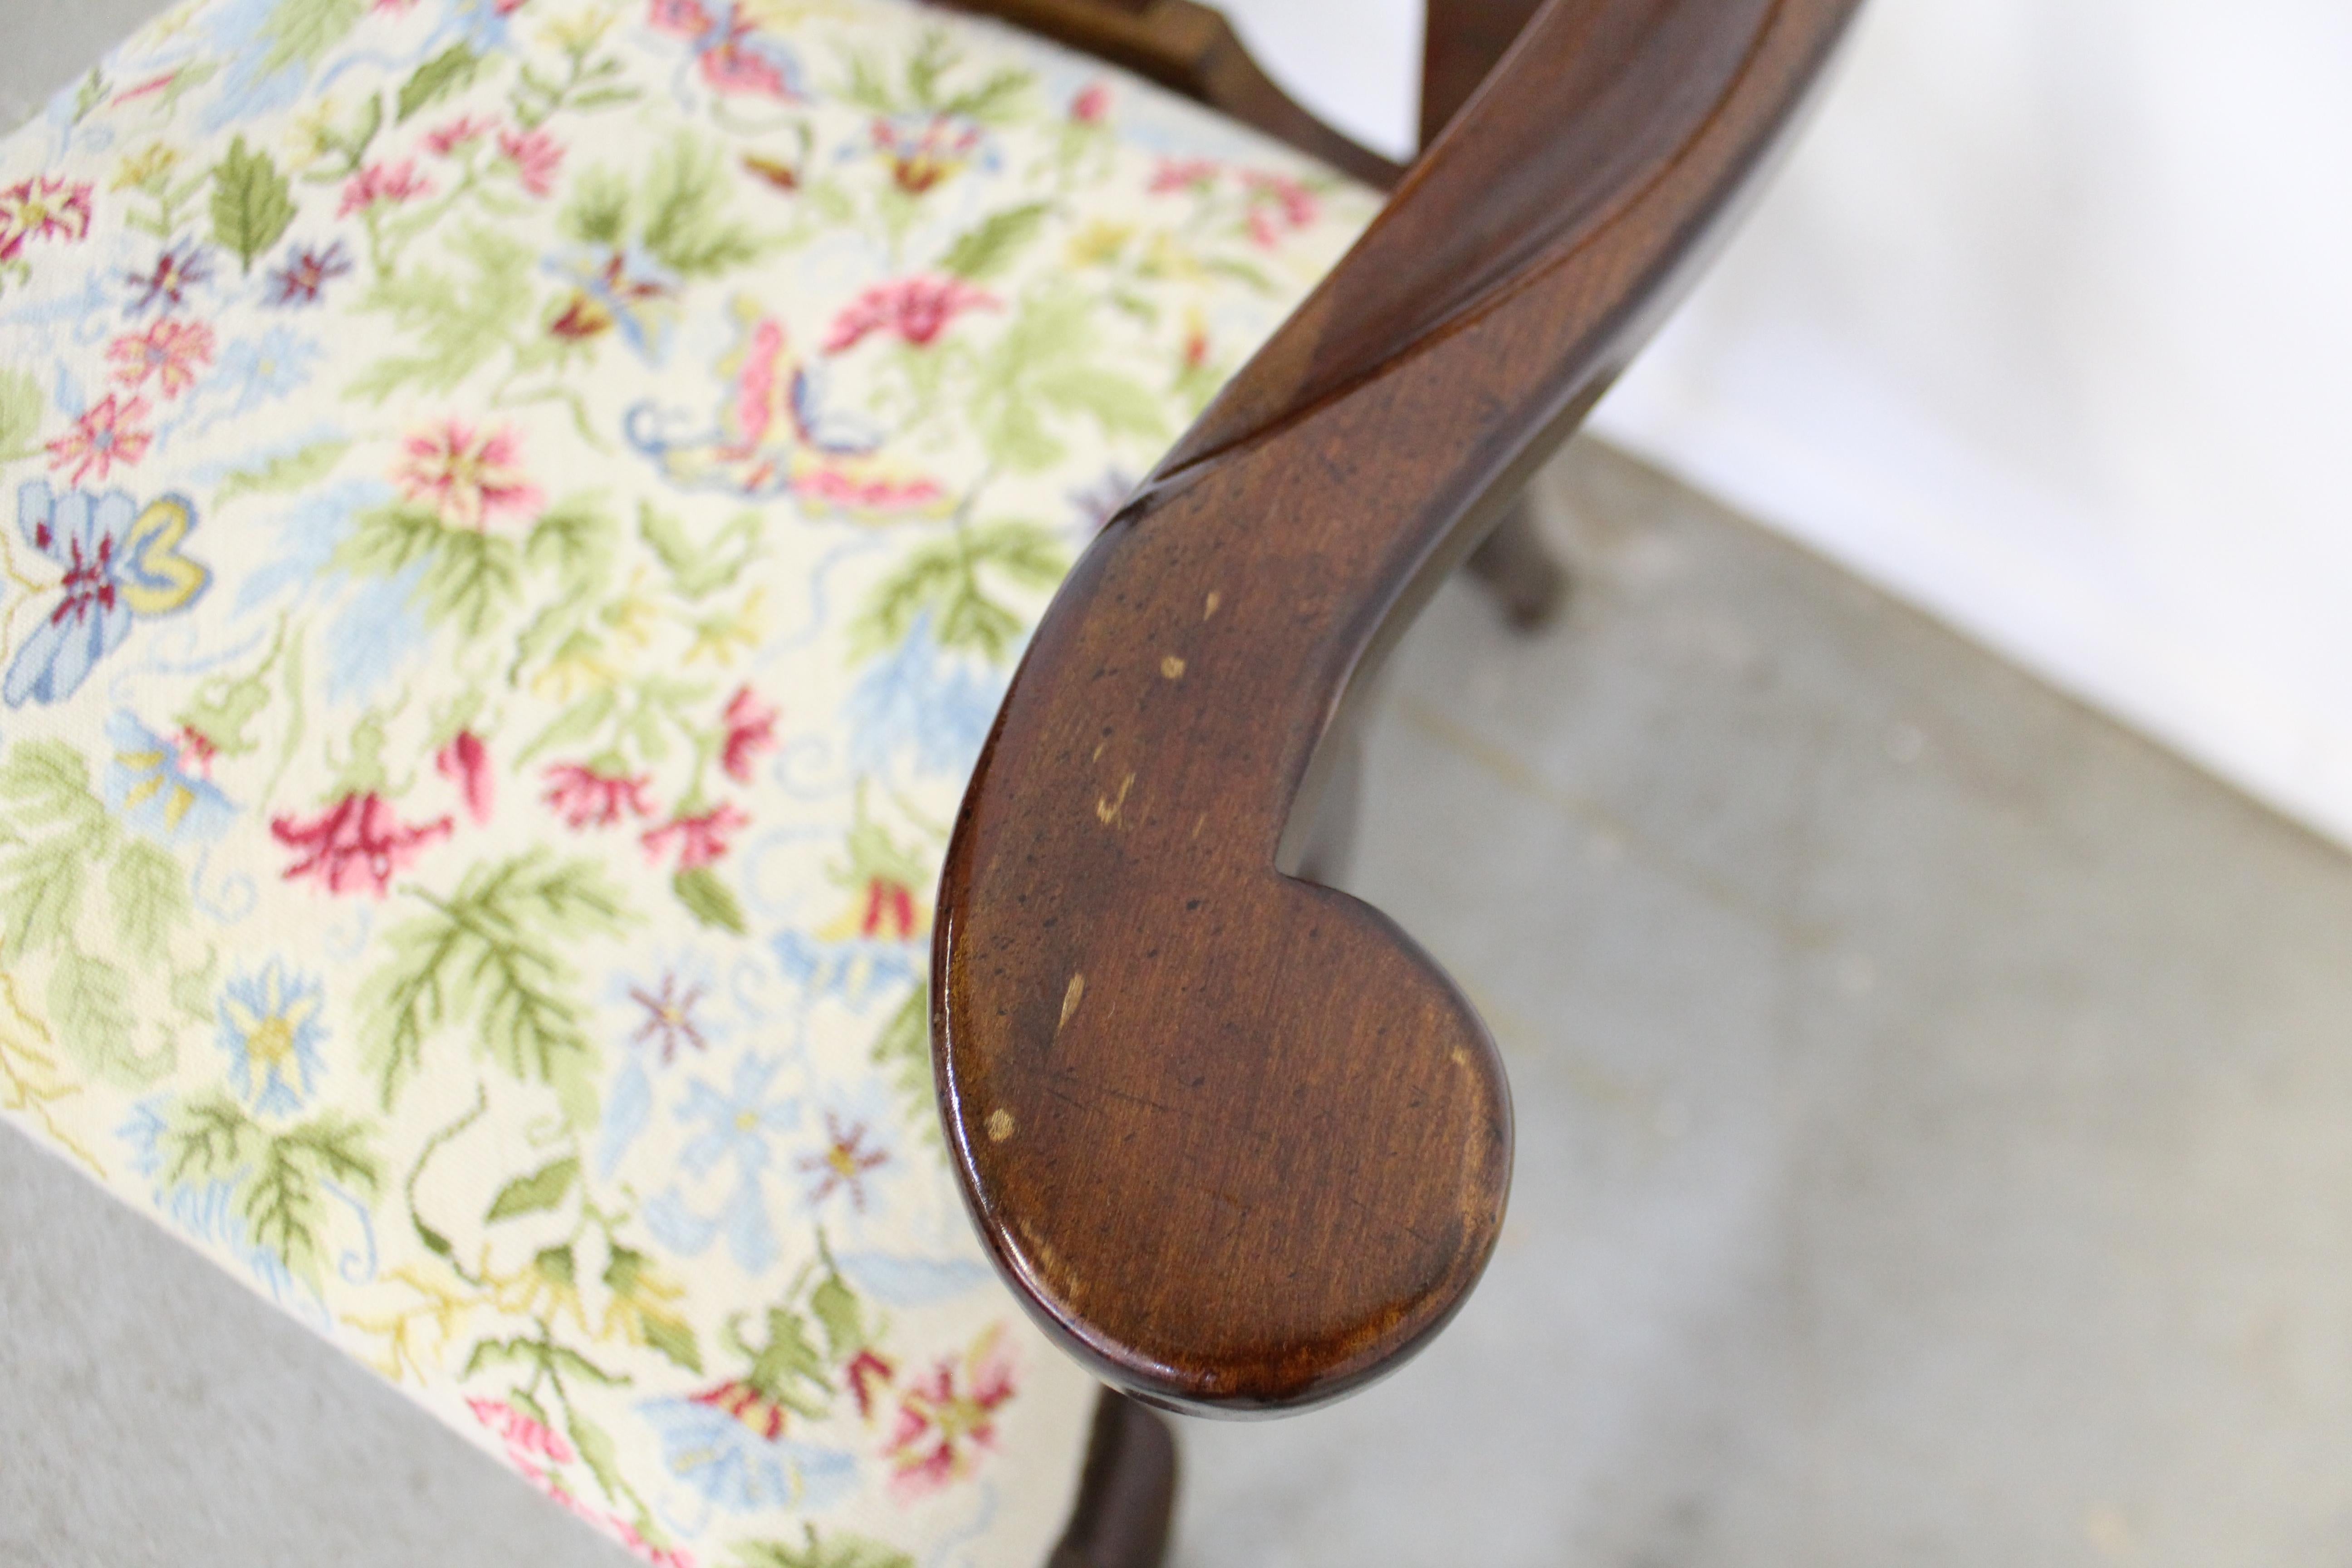 antique queen anne chair value